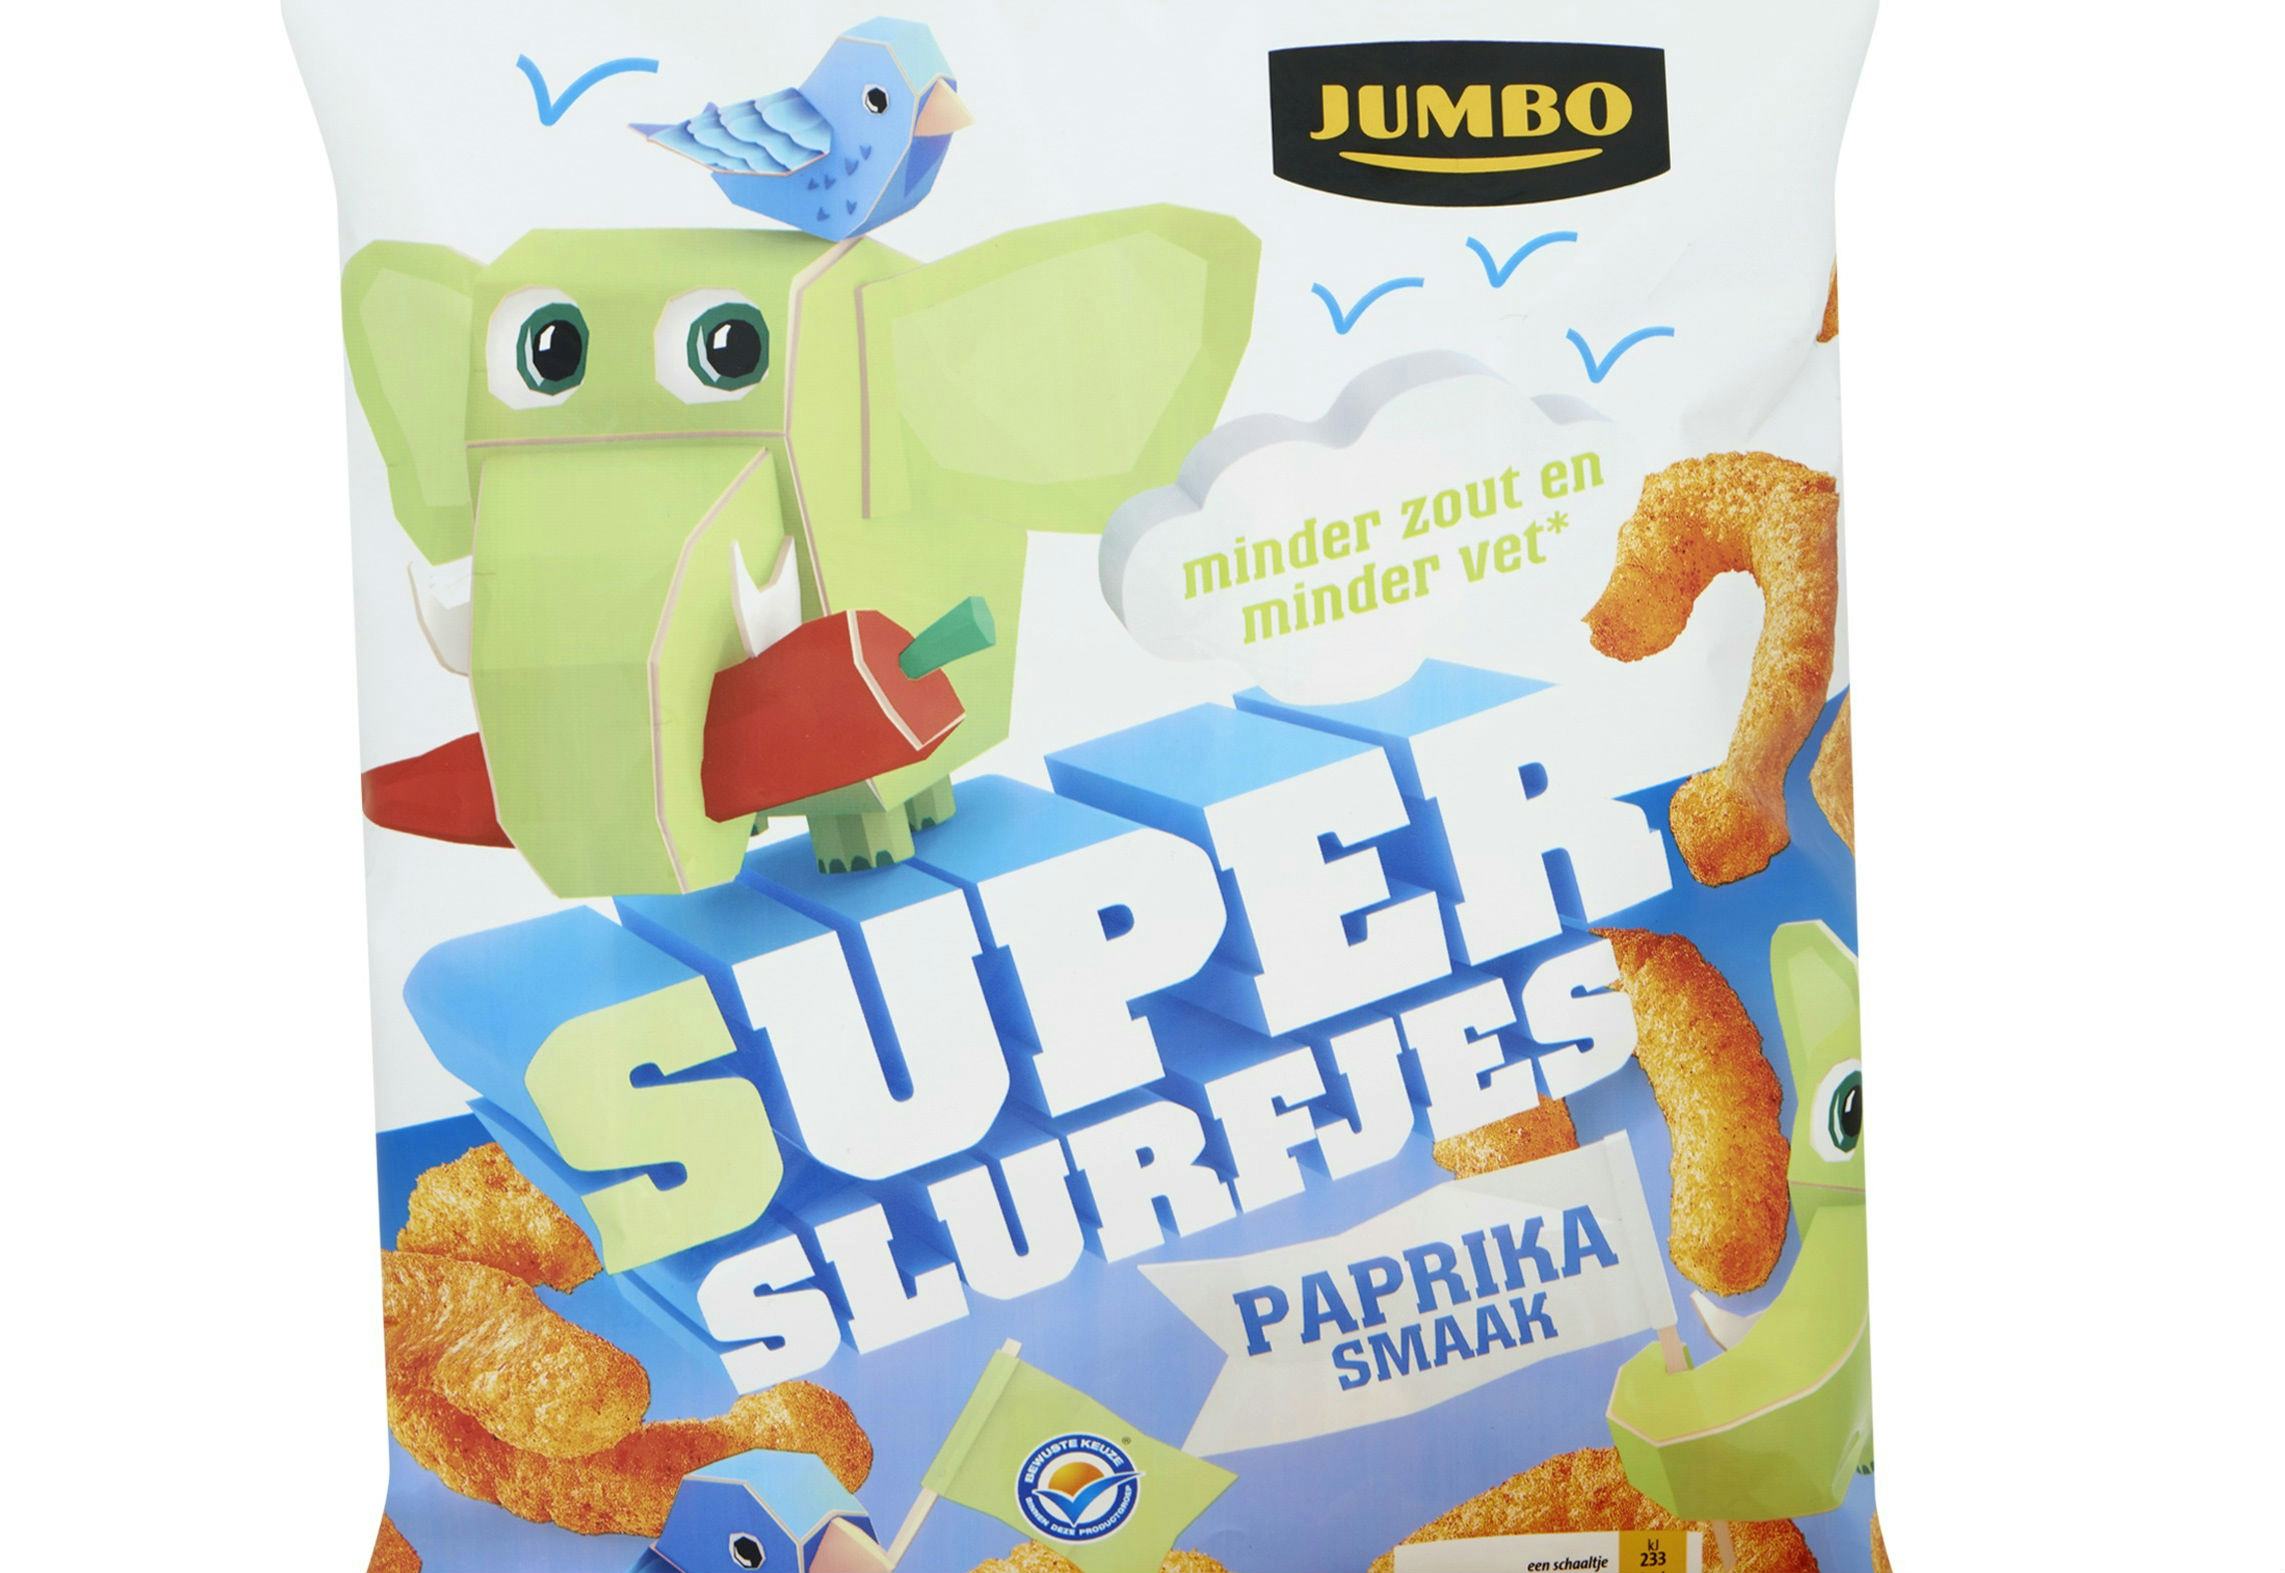 Jumbo lanceert chips met Vinkje-keurmerk